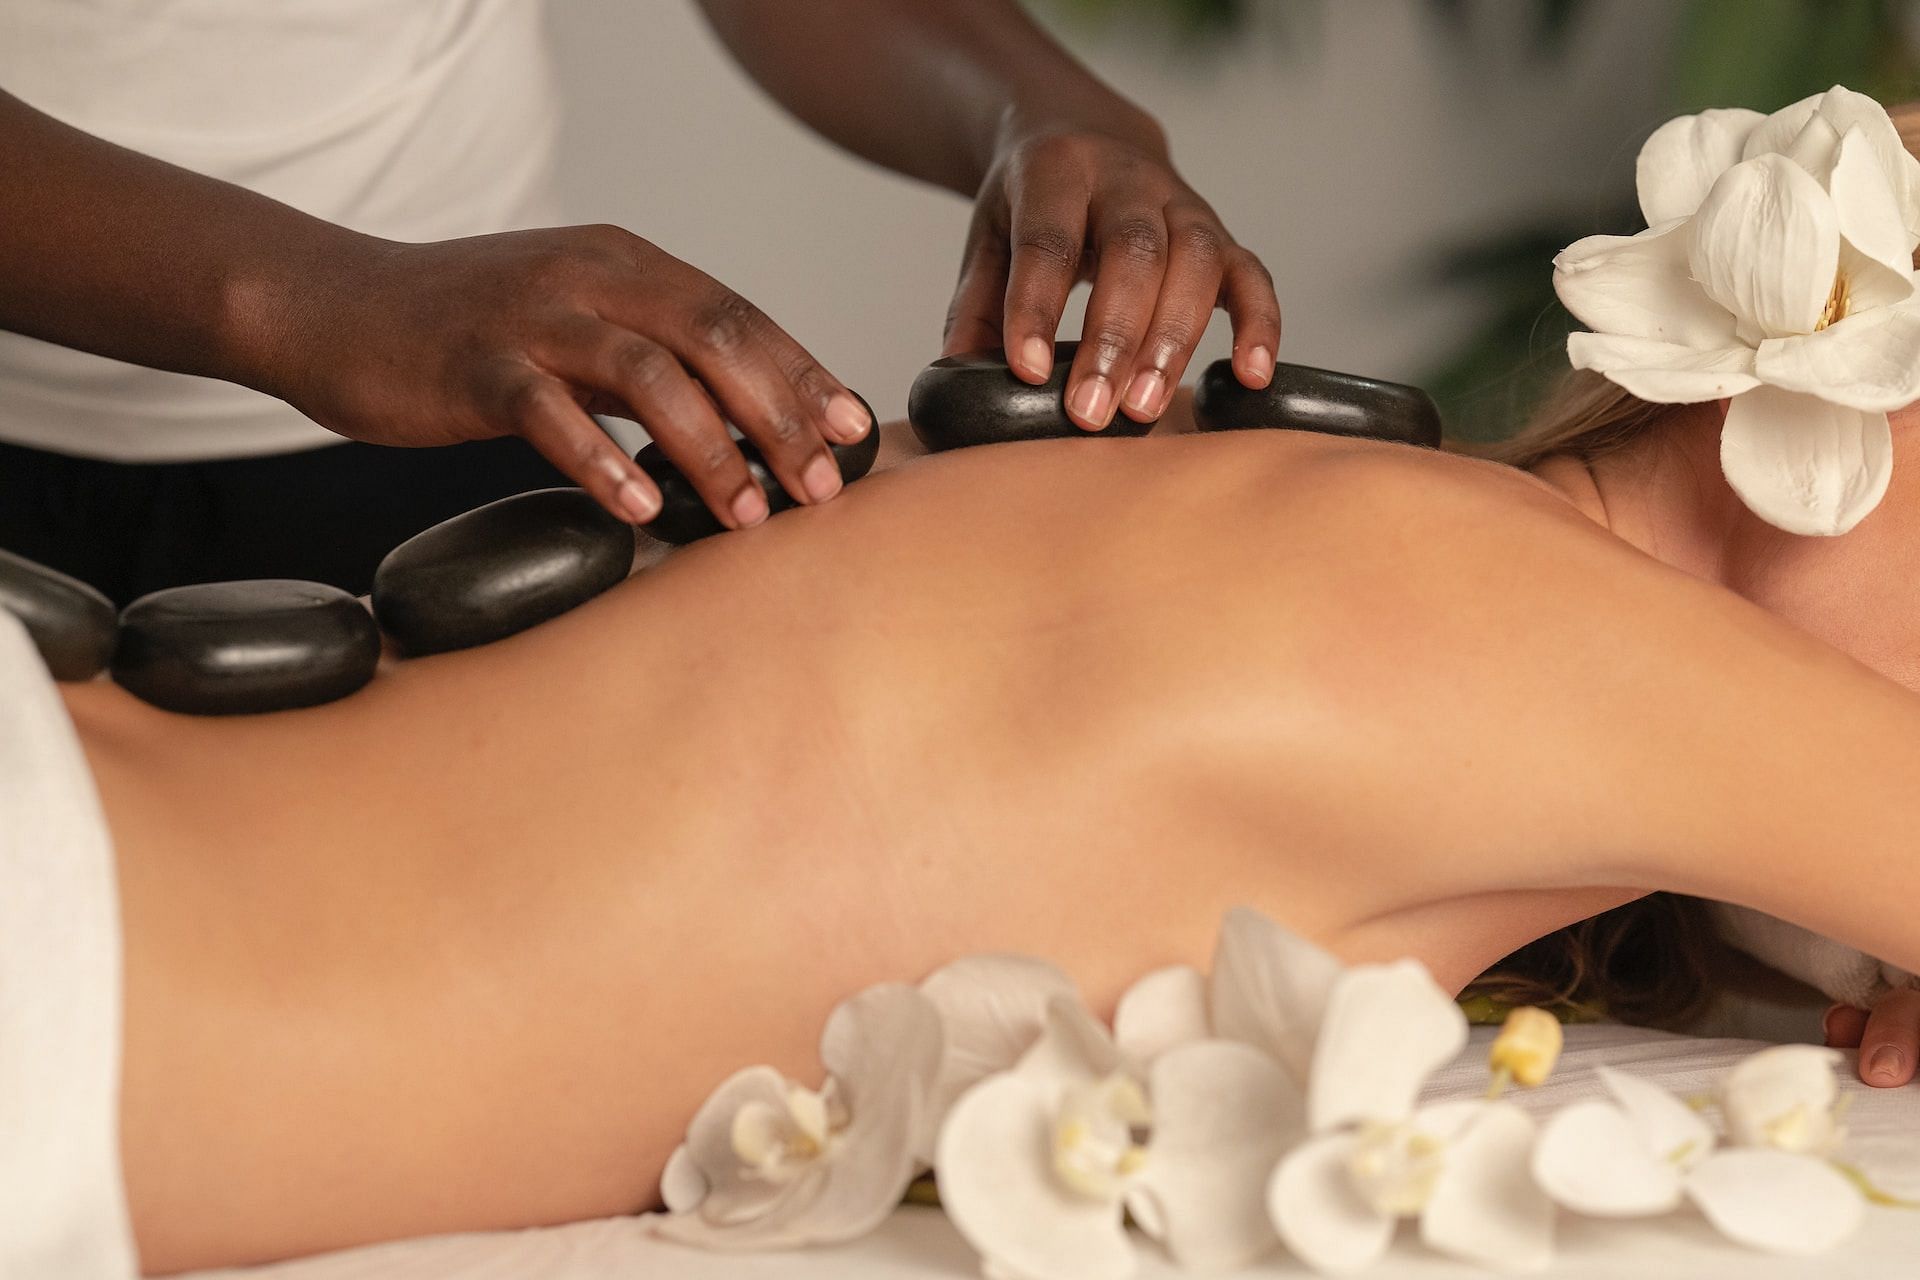 Side effects of hot stone massage. (Photo via Unsplash)